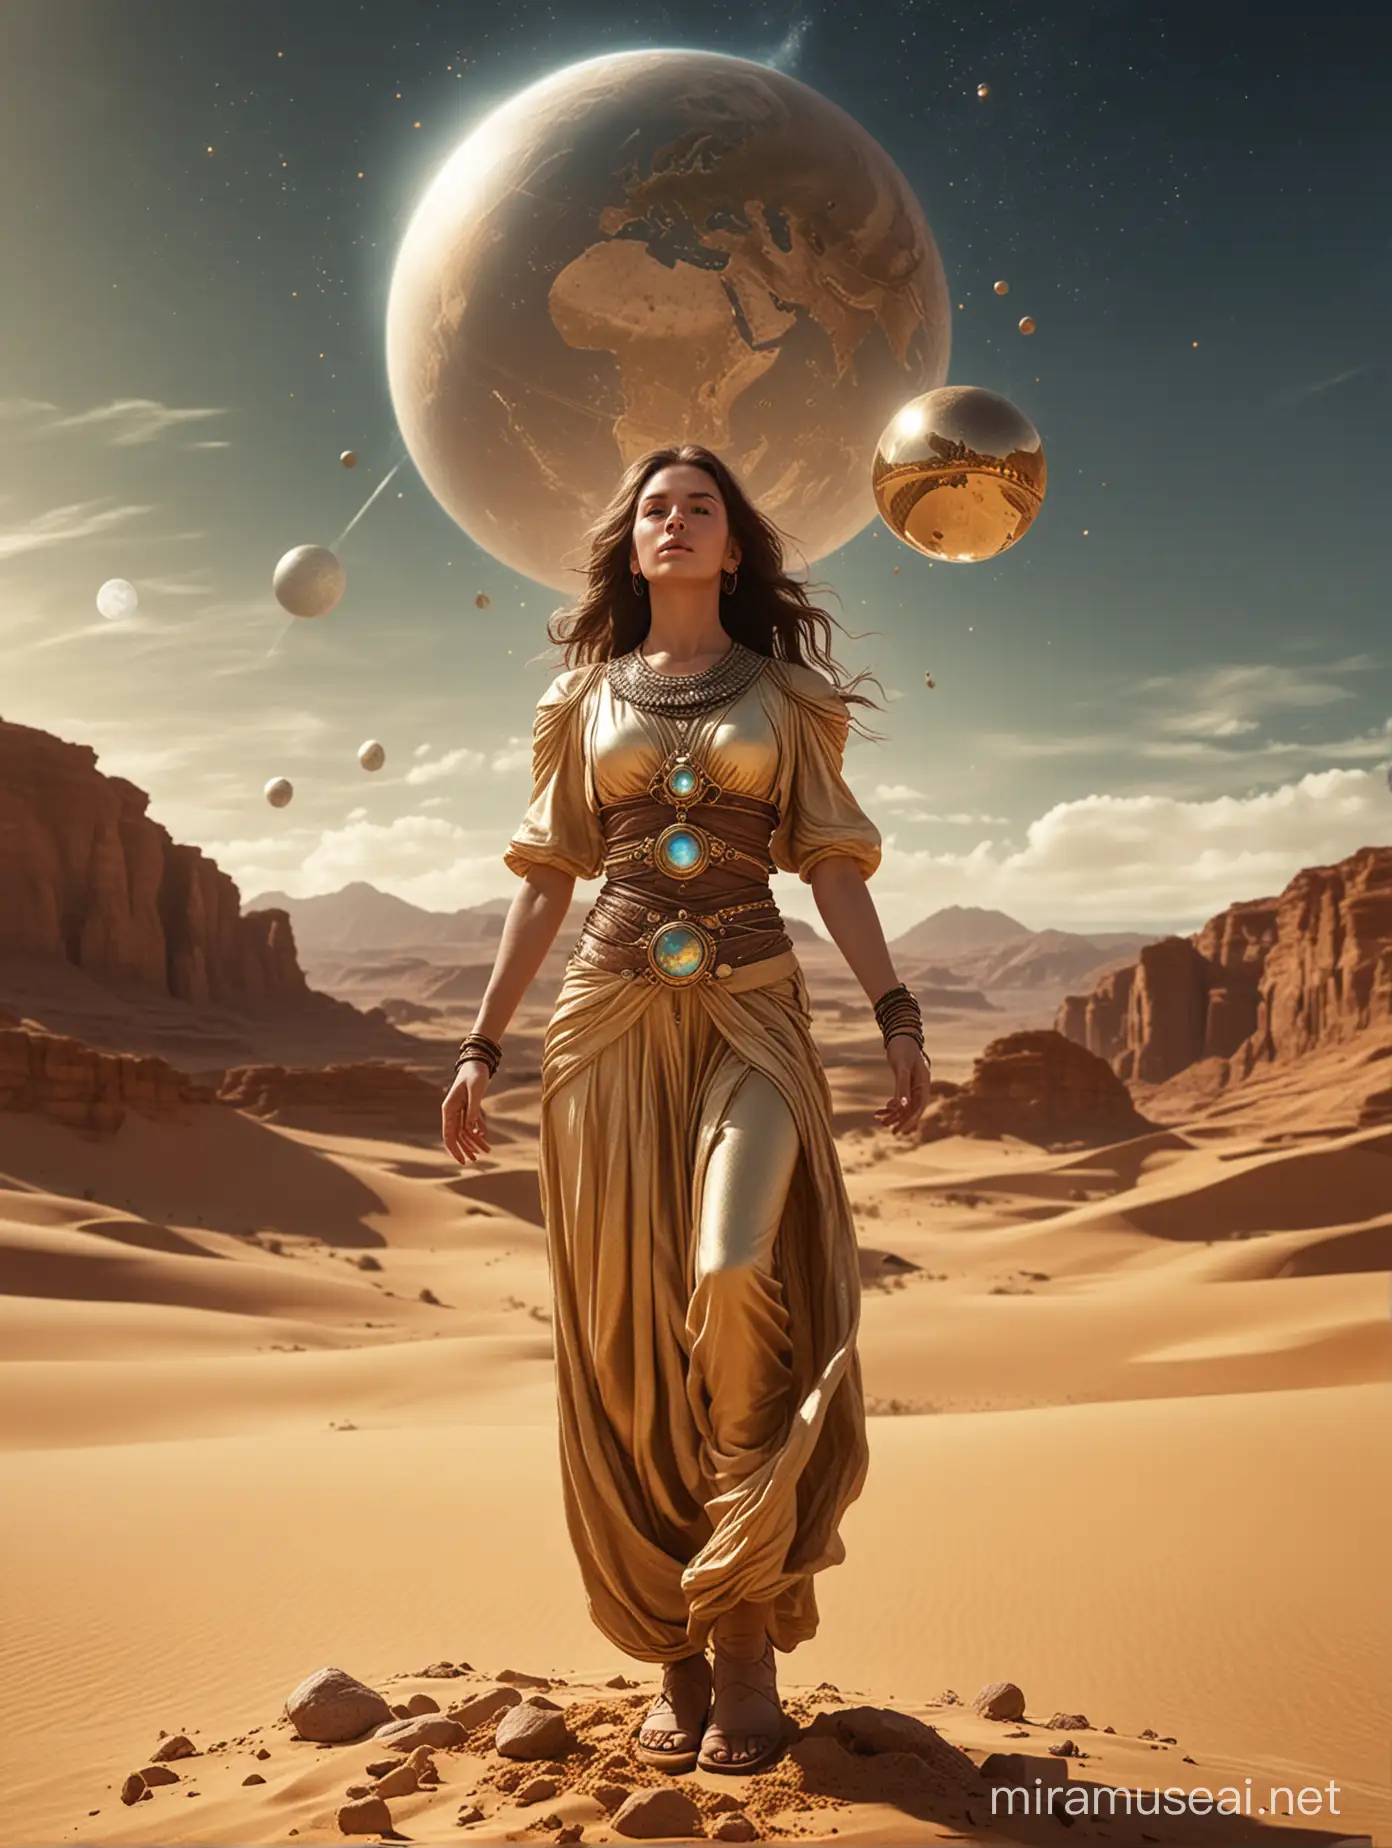 aline women standing in the desert high fantasy, earth globe in her hands, flying clothes adventure, golden stones, flying sands, interstellar.